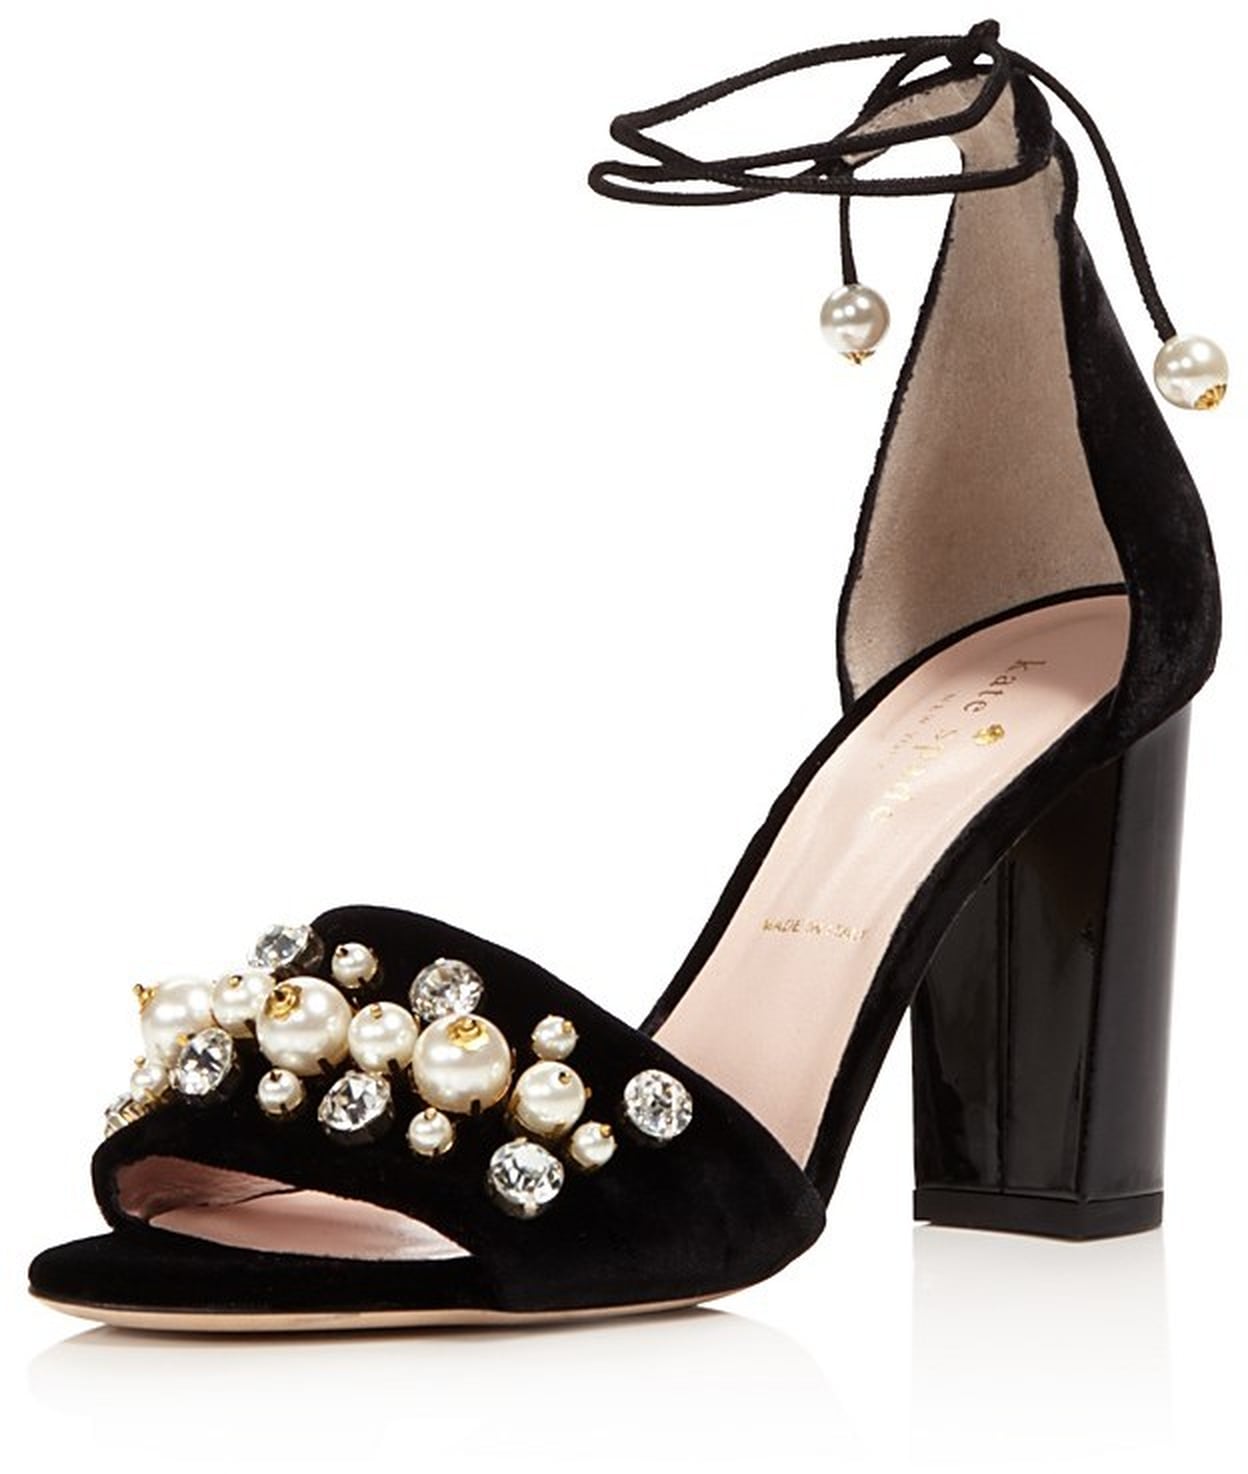 Jennifer Aniston Tabitha Simmons Shoes | POPSUGAR Fashion